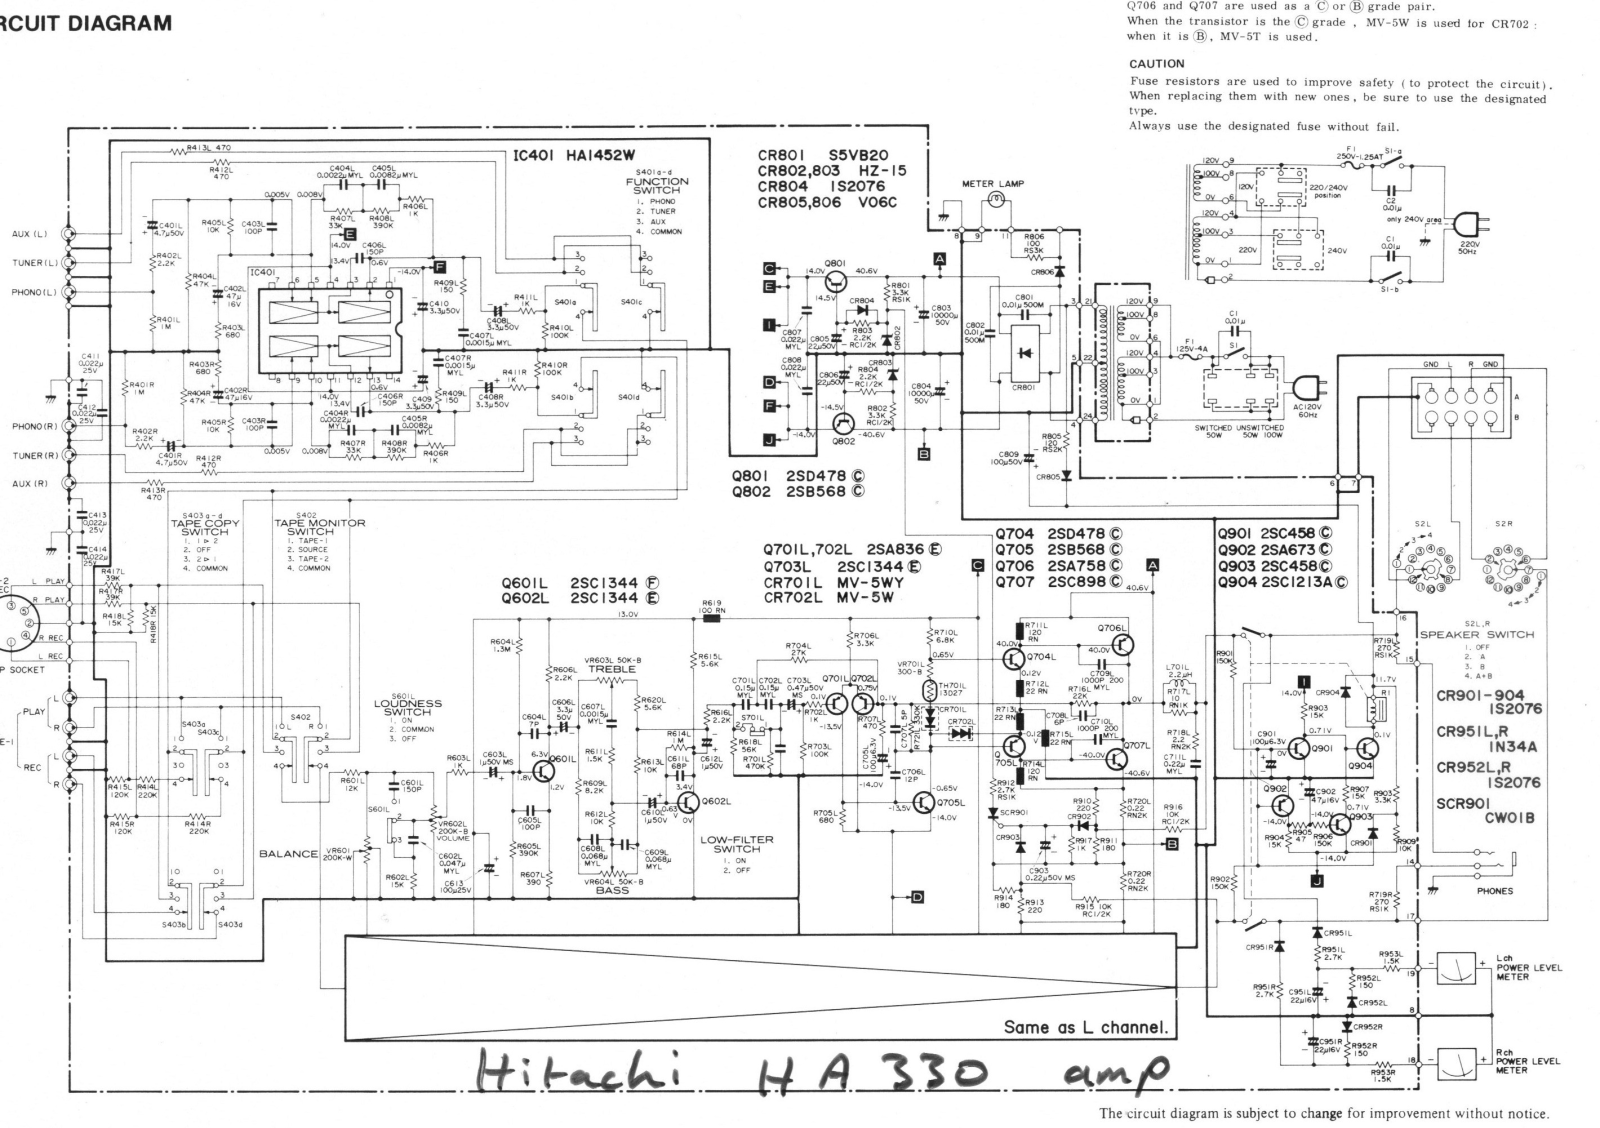 Hitachi HA-330 Schematic